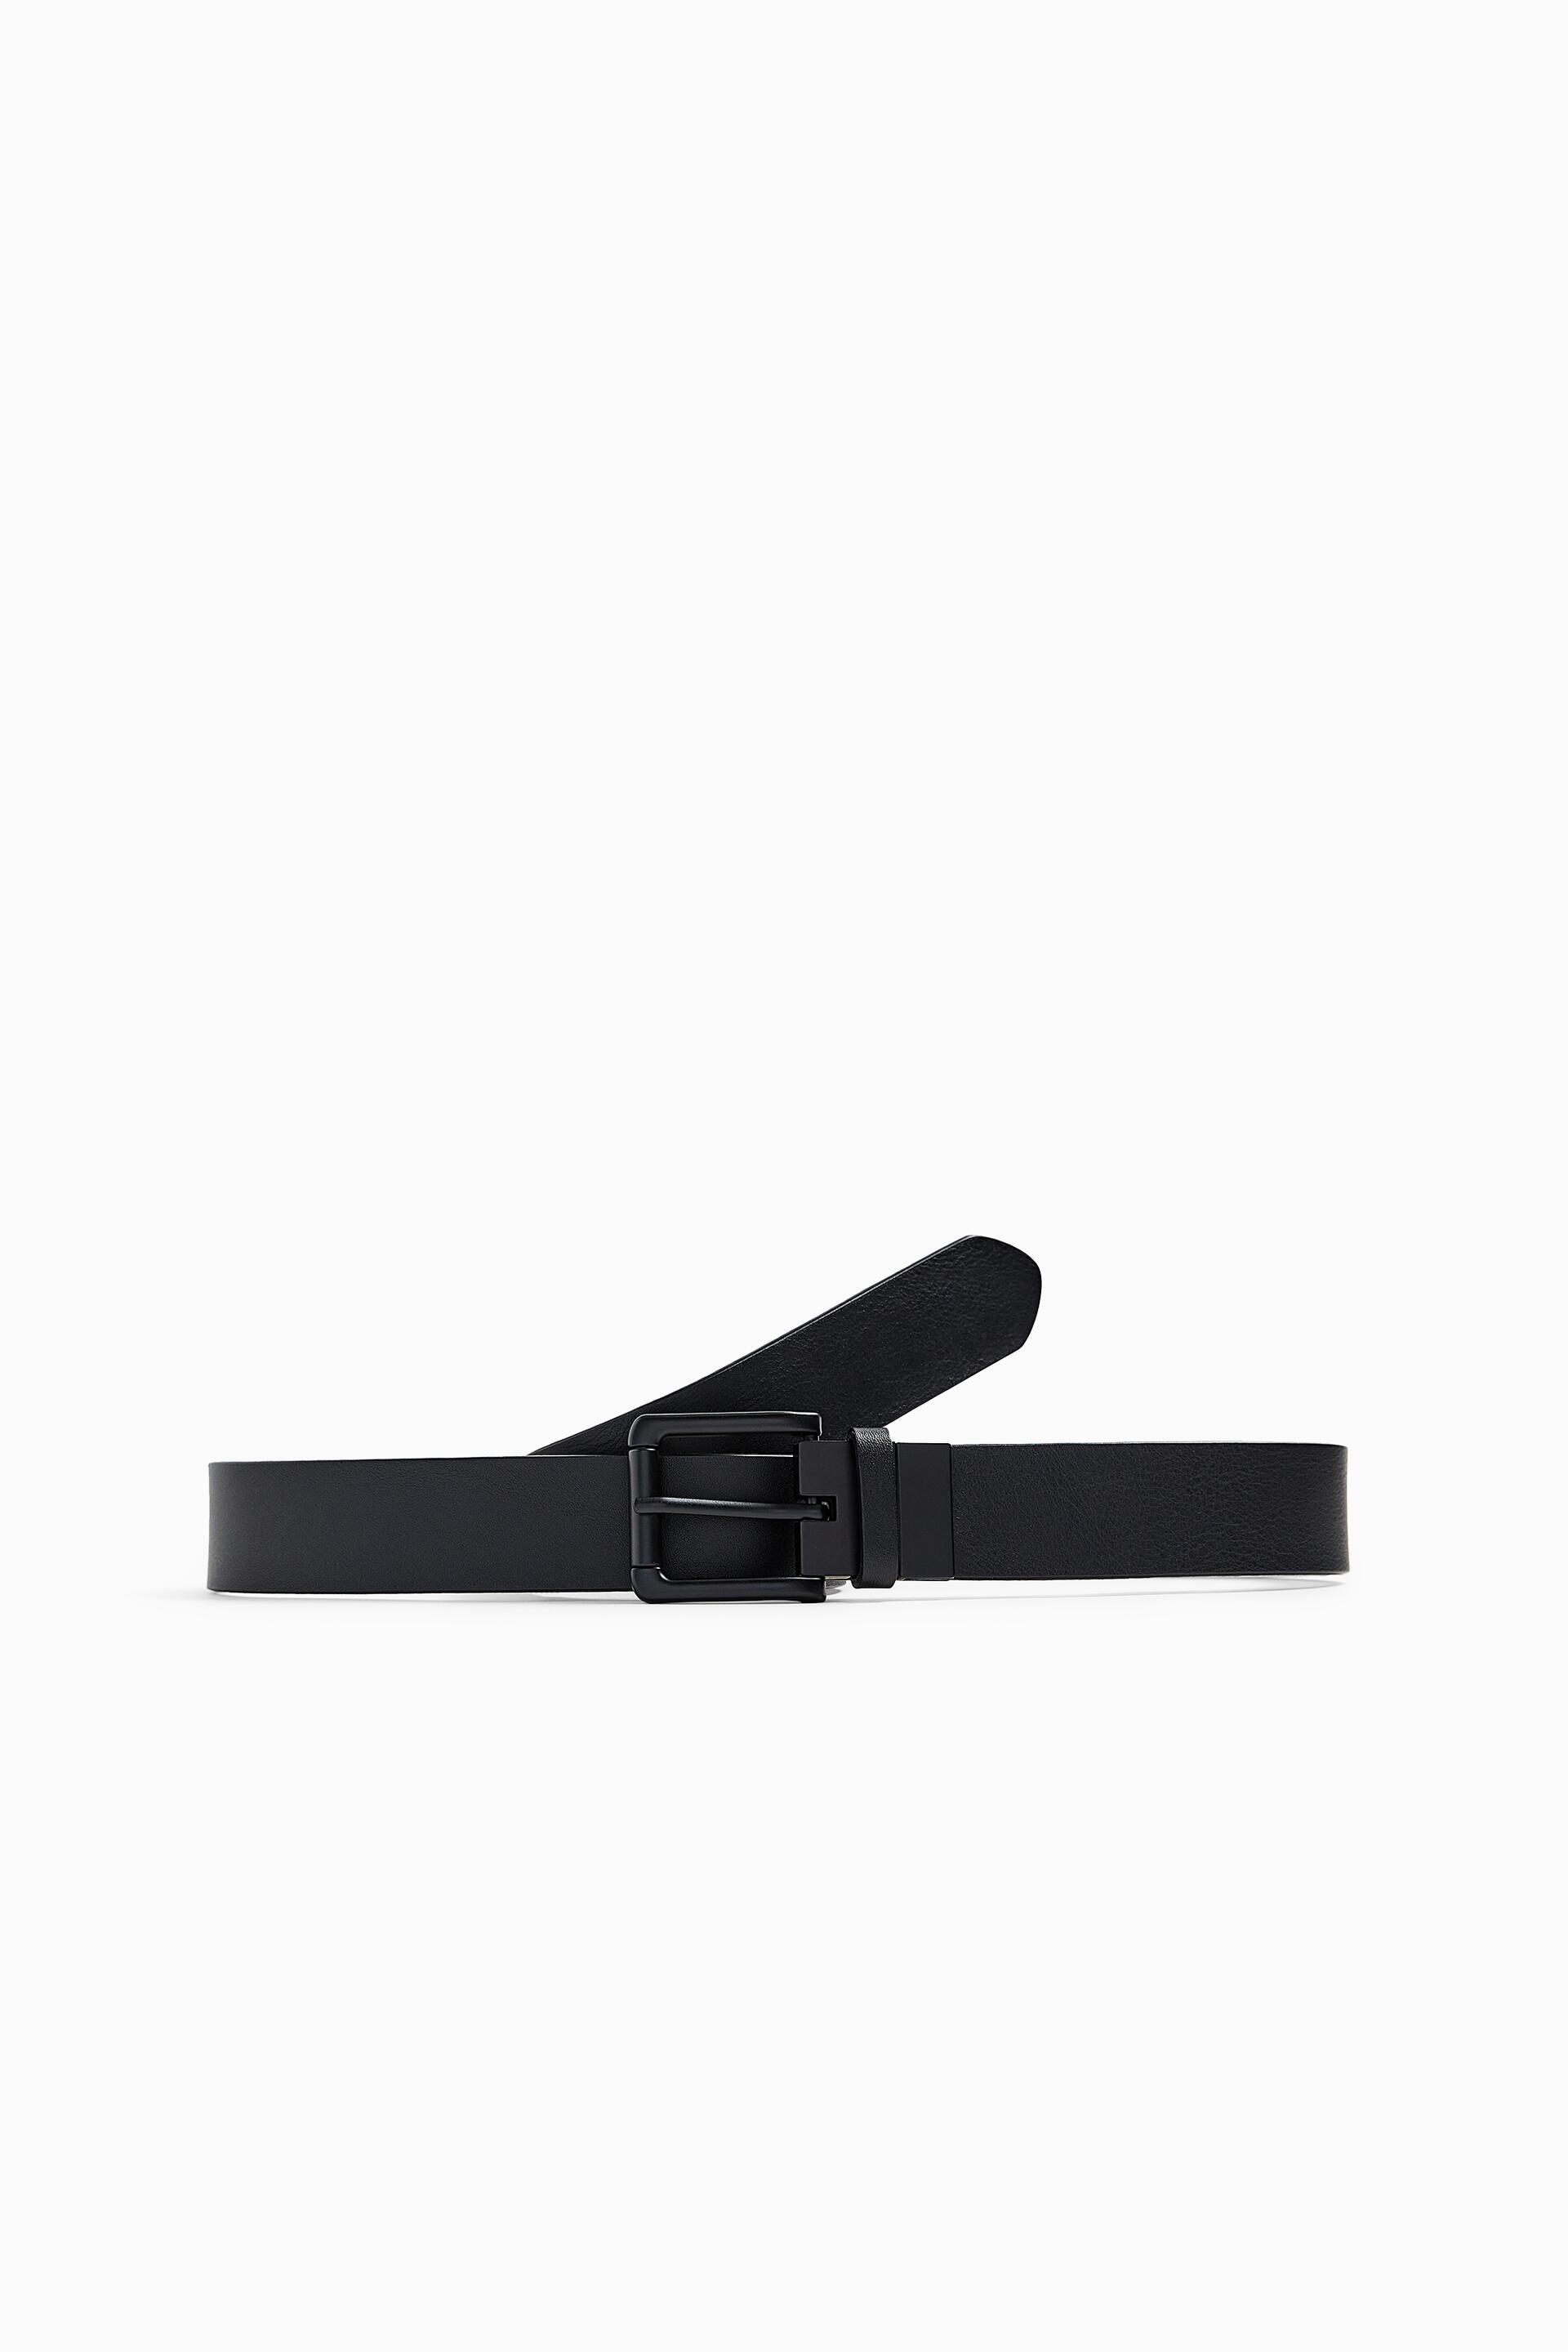 Zara Reversible Leather Belt - Big Apple Buddy